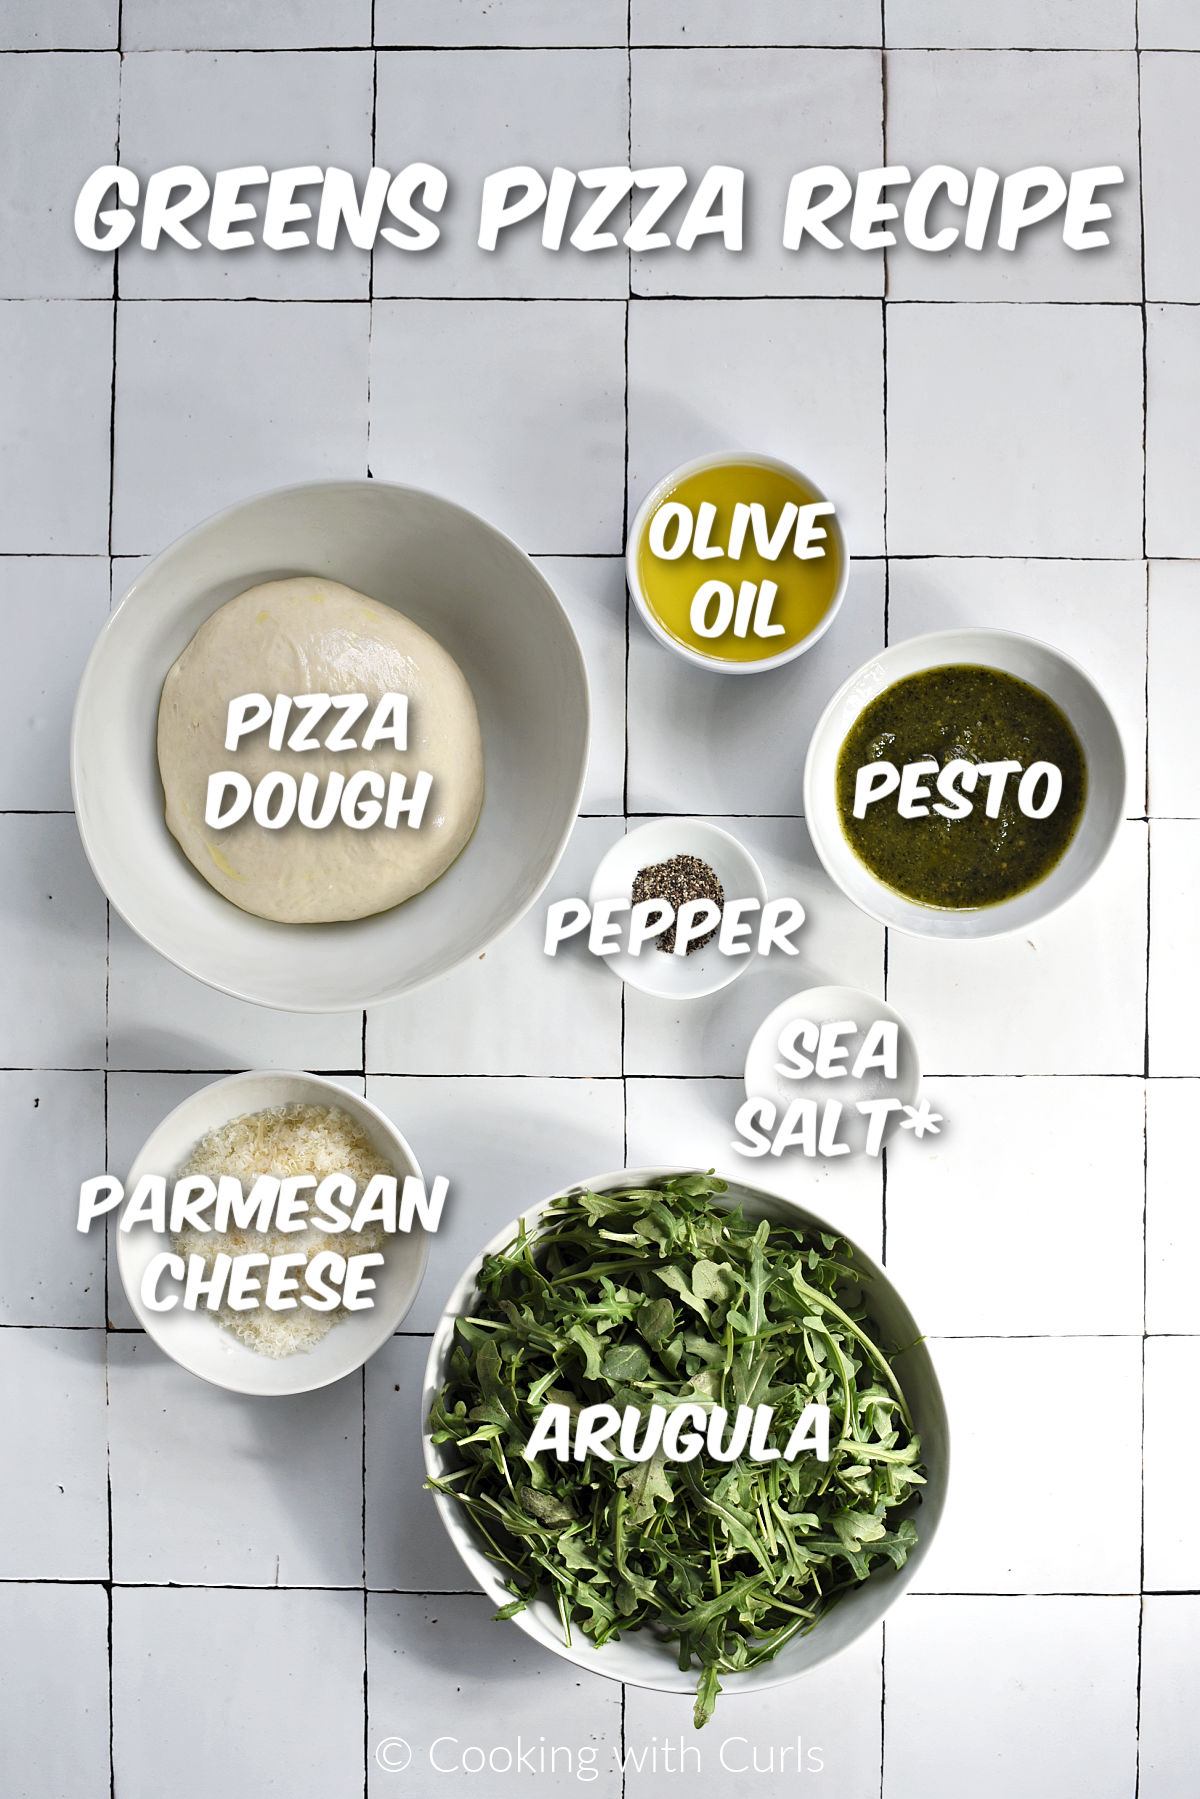 Greens Pizza Recipe ingredients. 